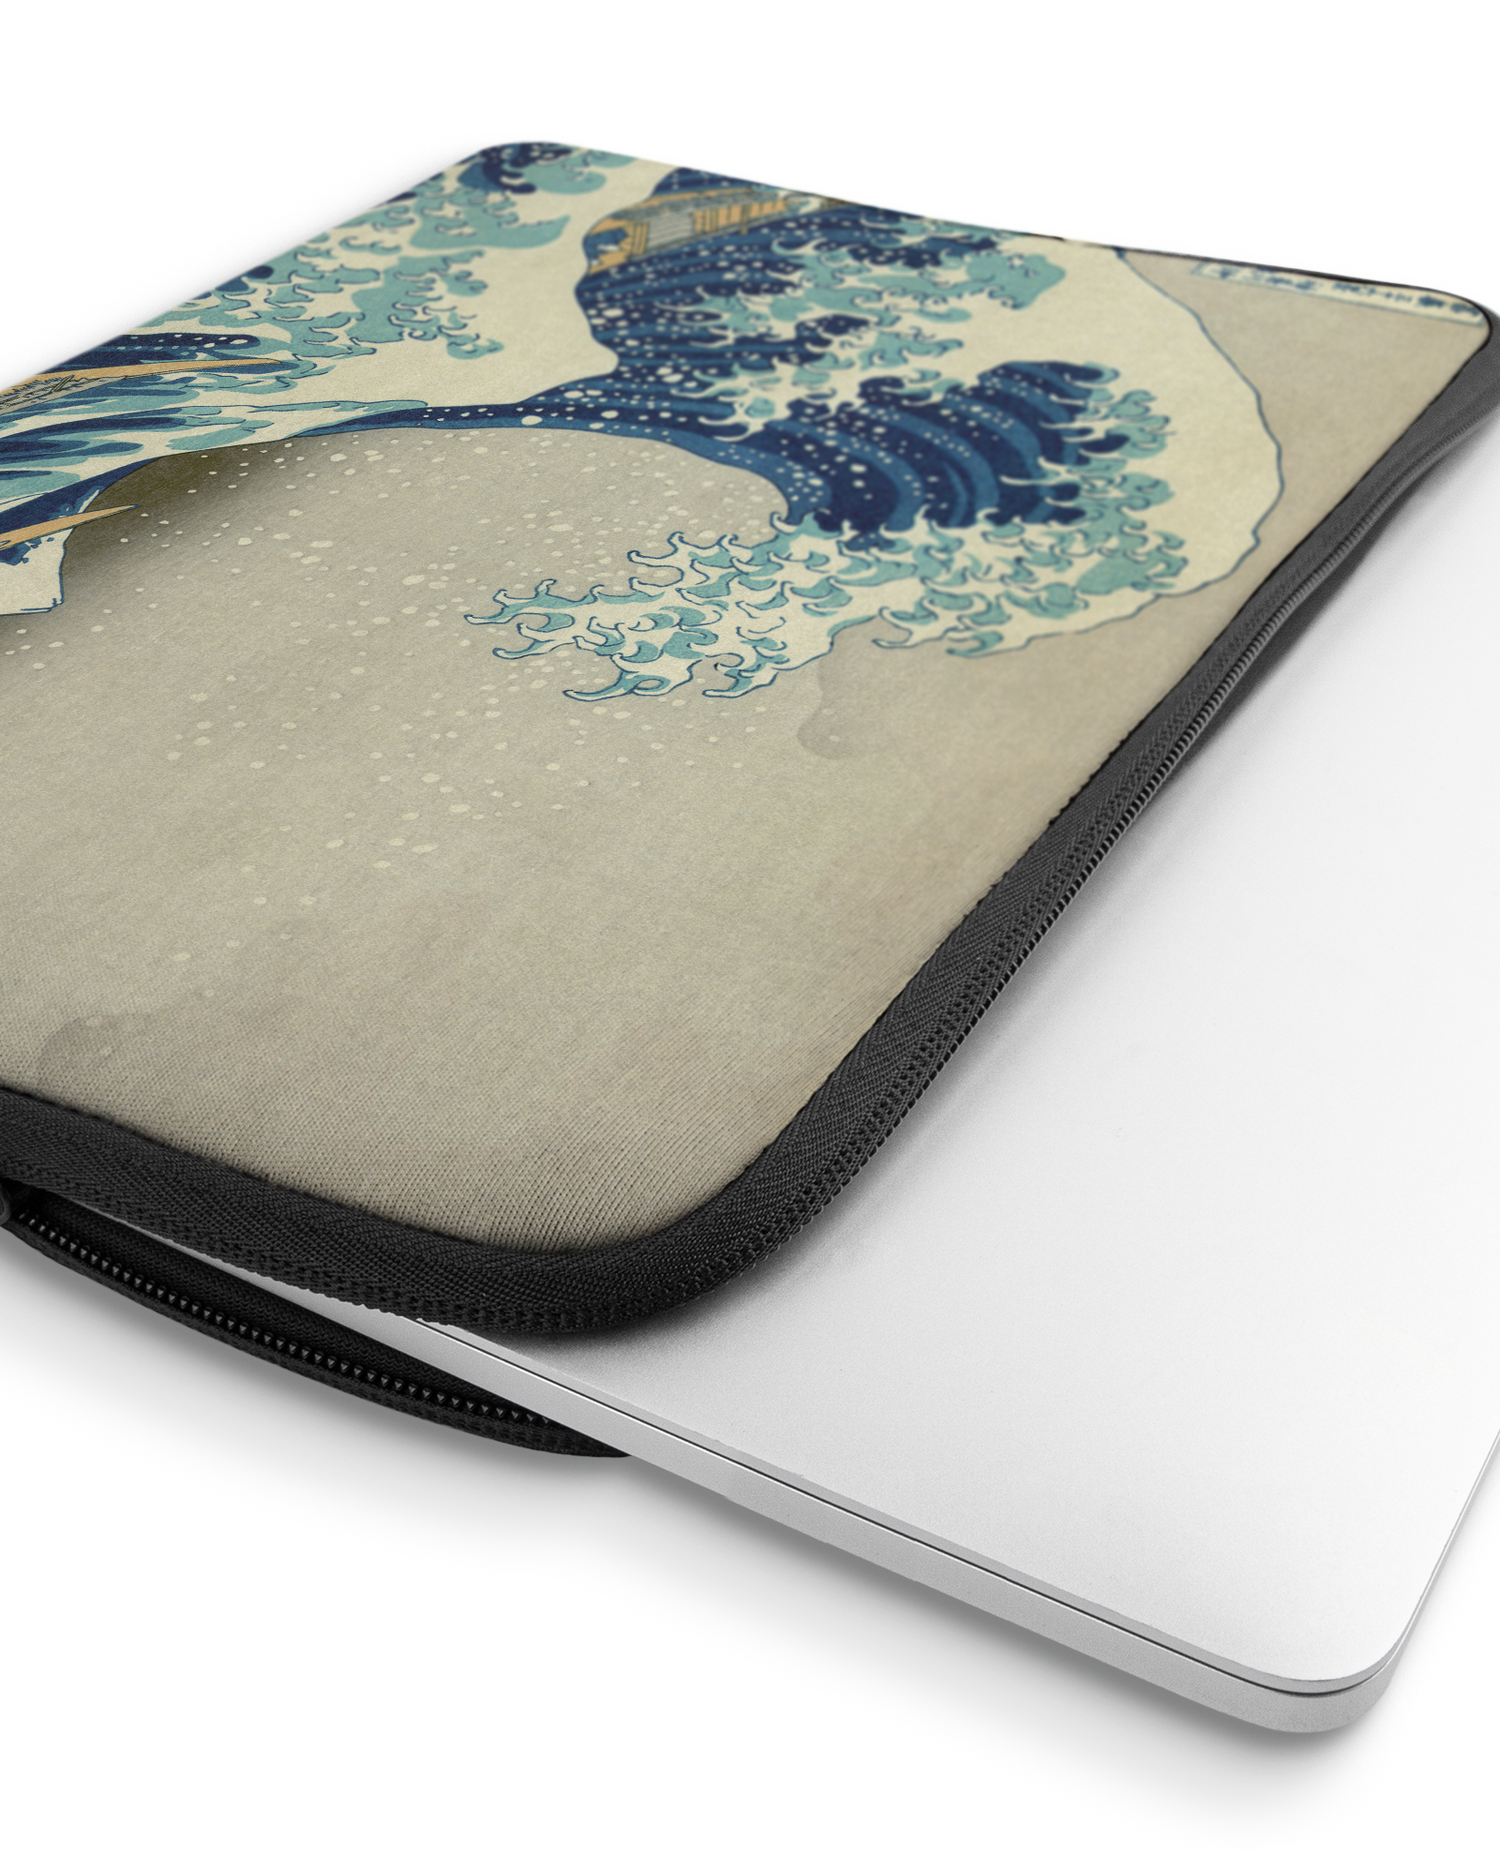 Great Wave Off Kanagawa By Hokusai Laptophülle 16 Zoll mit Gerät im Inneren